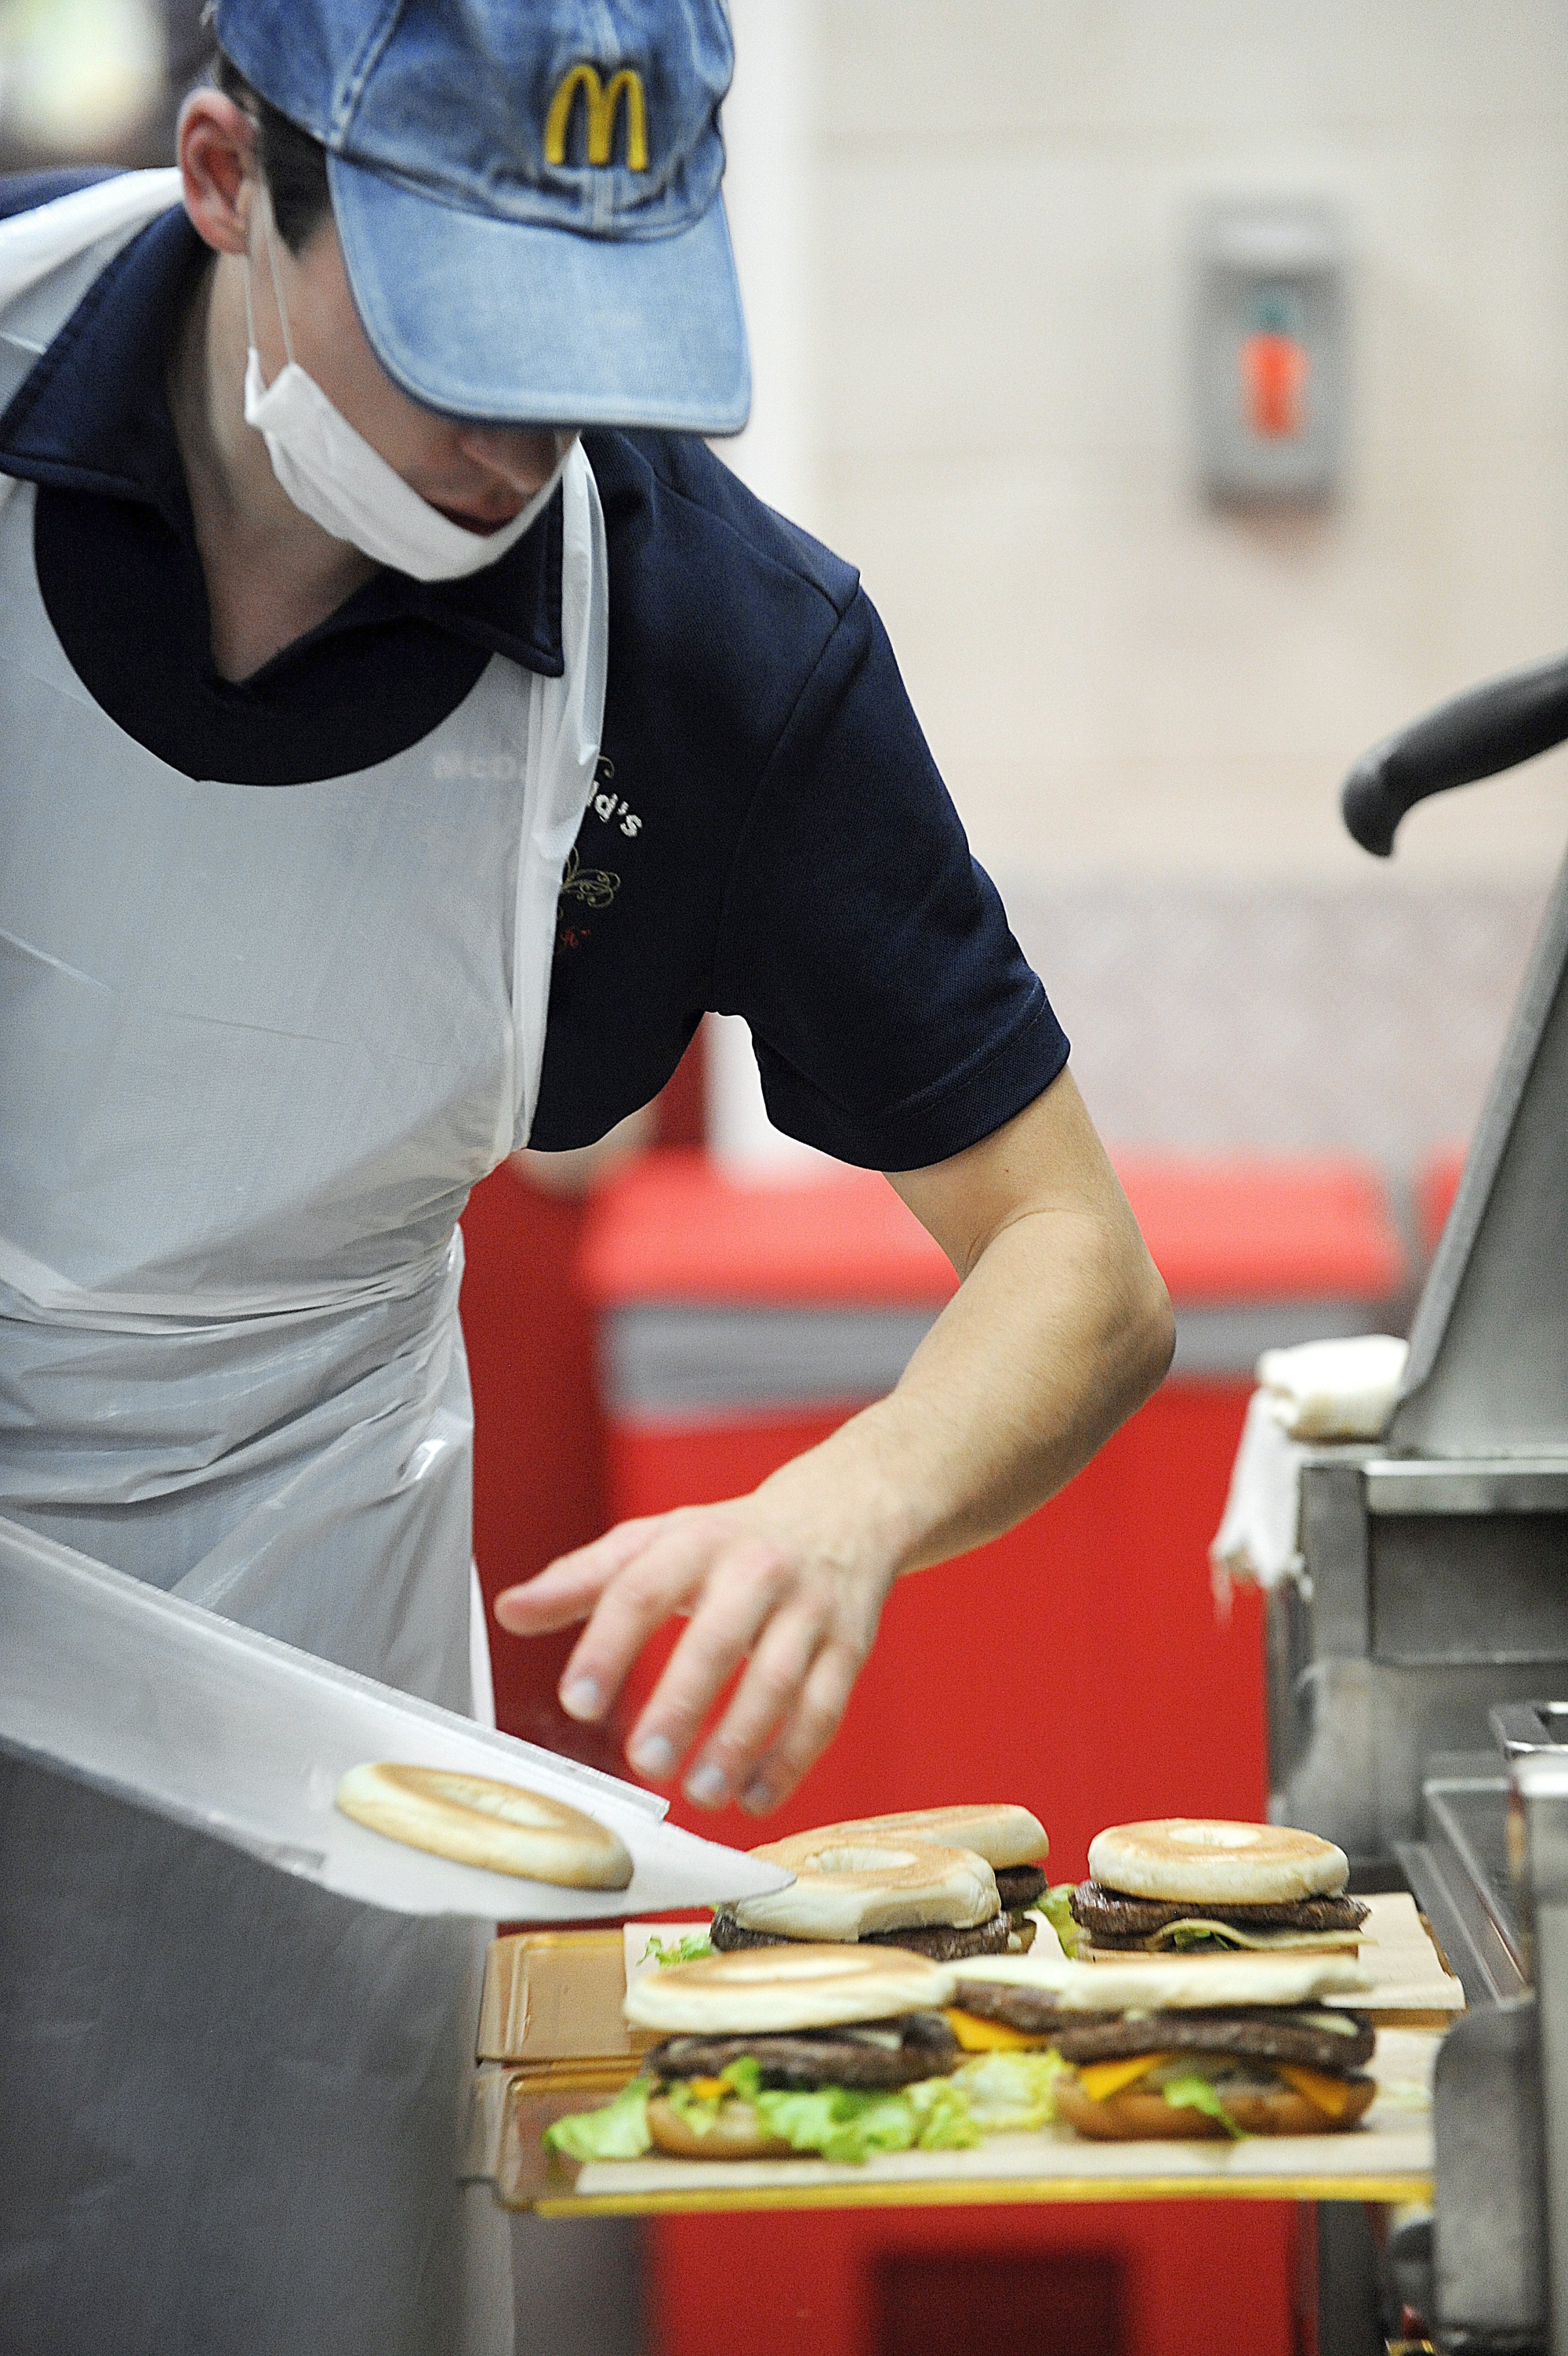 An employee prepares hamburgers at a MacDonalds restaurant.